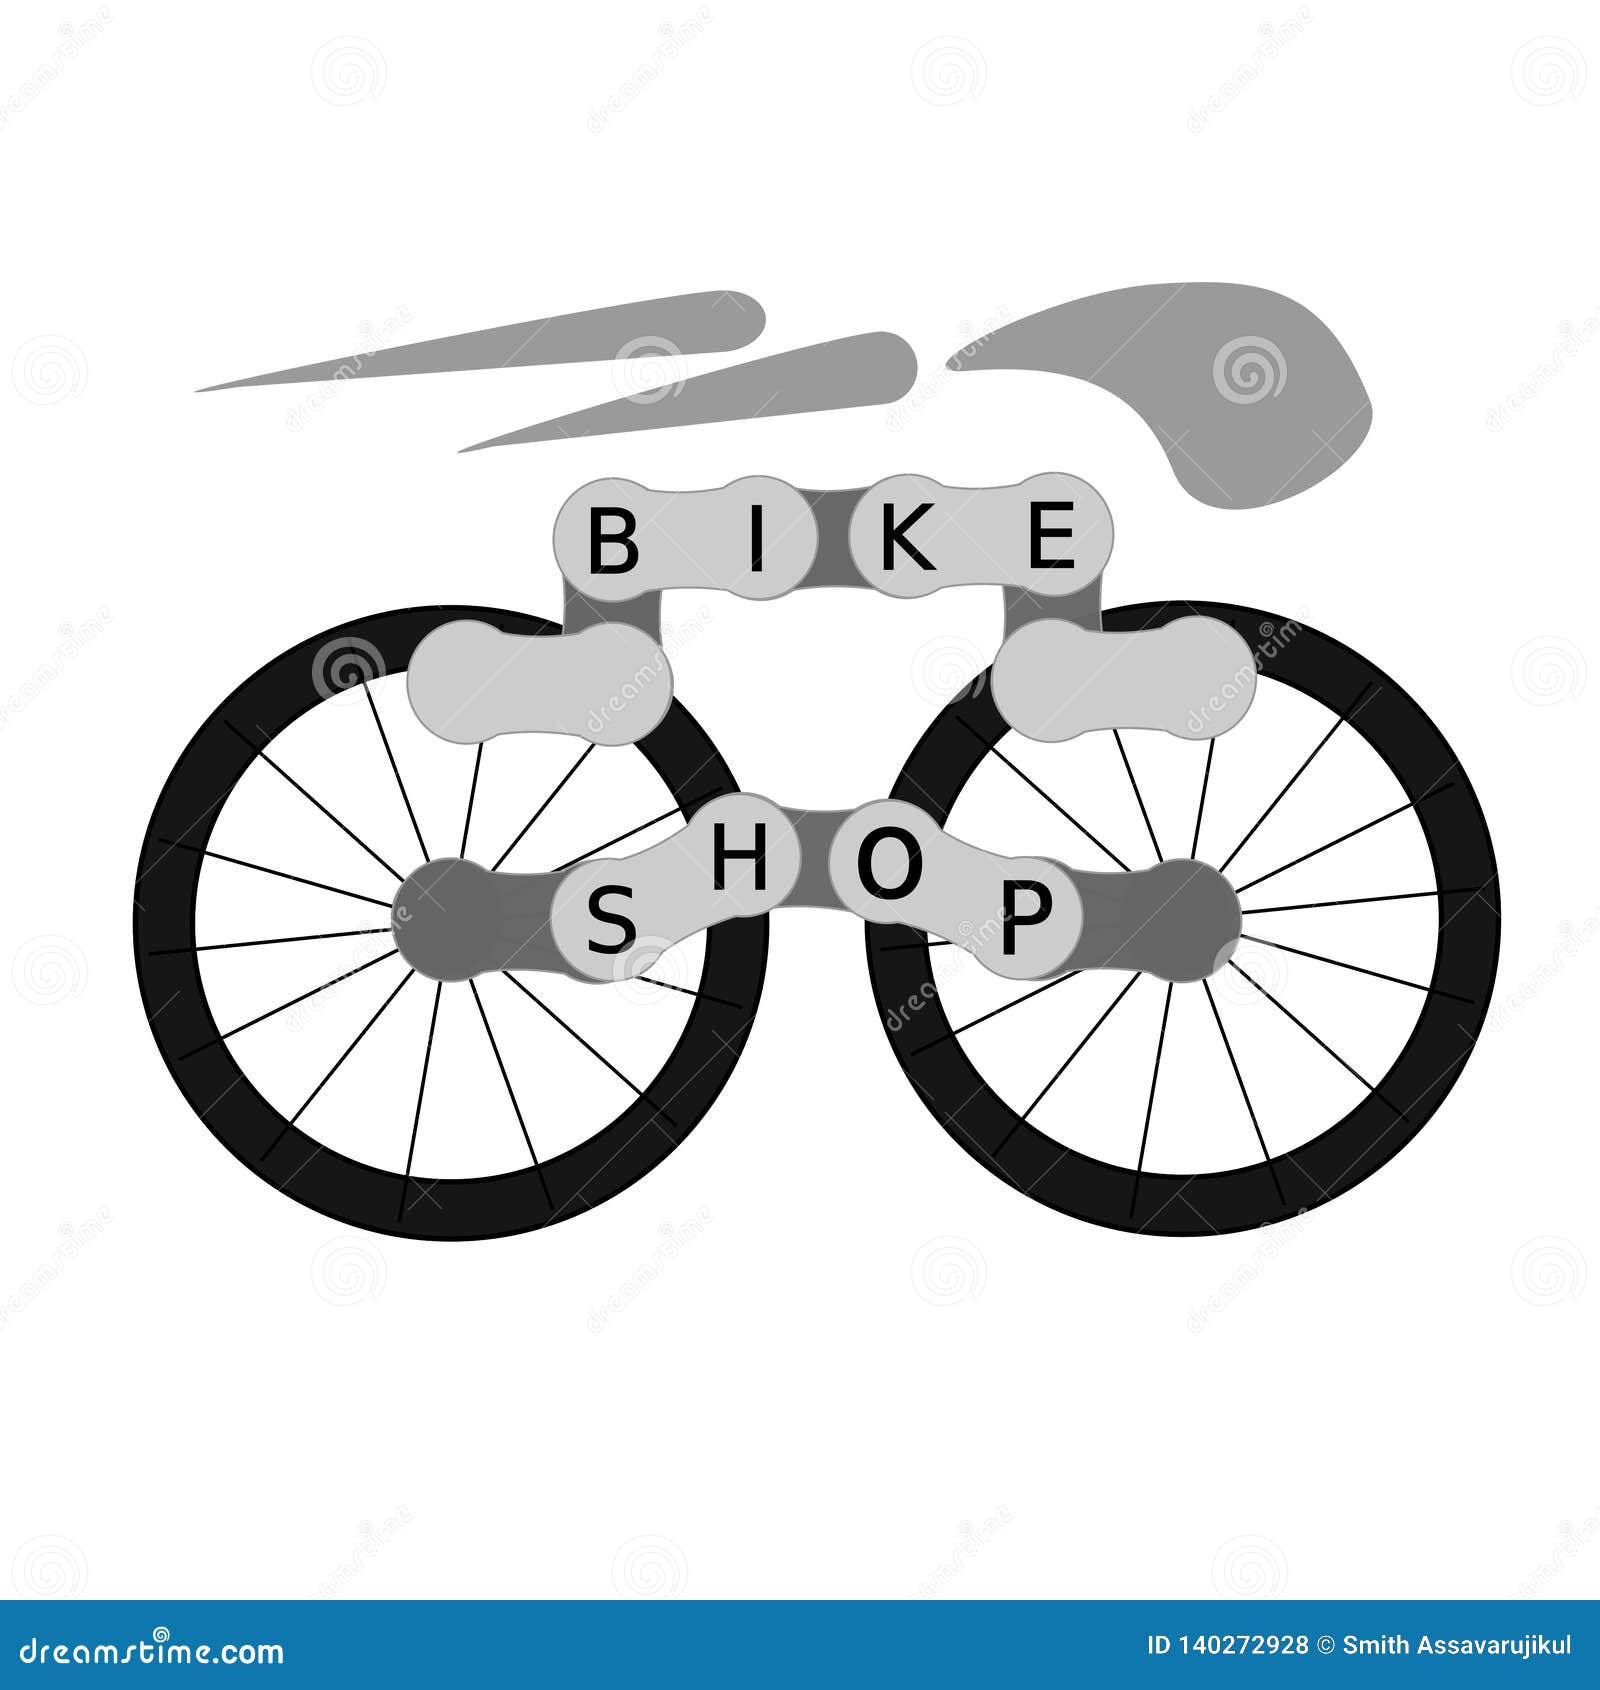 bike workshop logo